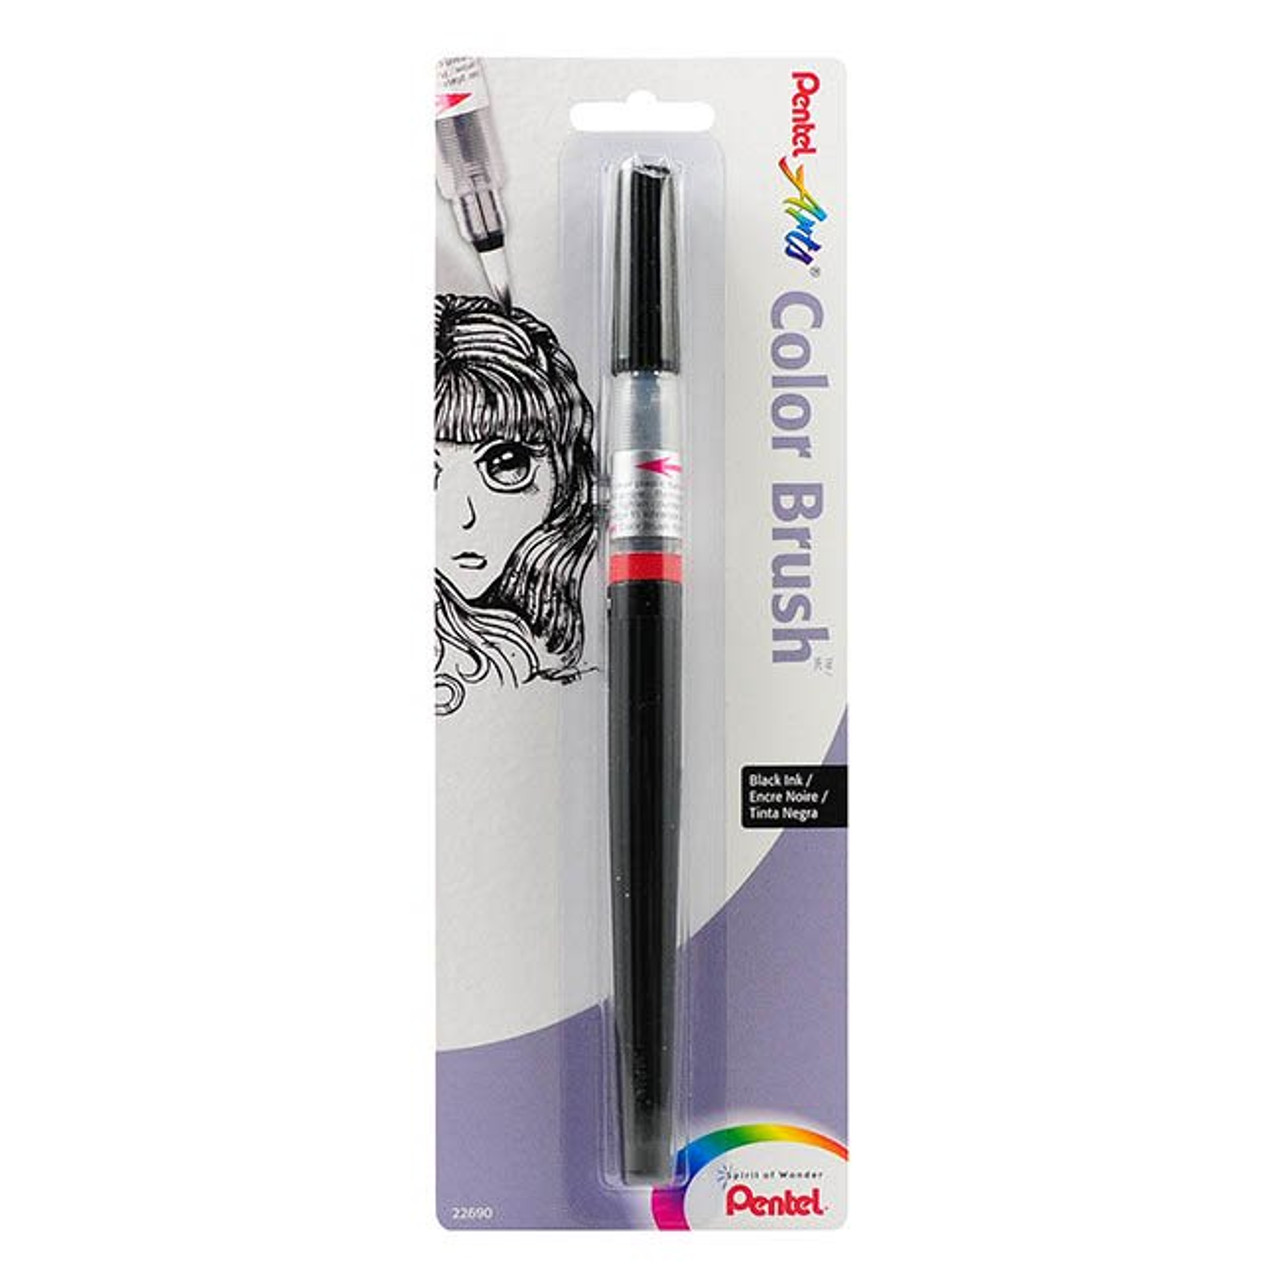 https://cdn11.bigcommerce.com/s-hk3ilm7bo7/images/stencil/1280x1280/products/15654/7355/clr-brush-pen-black__56314.1675185884.jpg?c=2